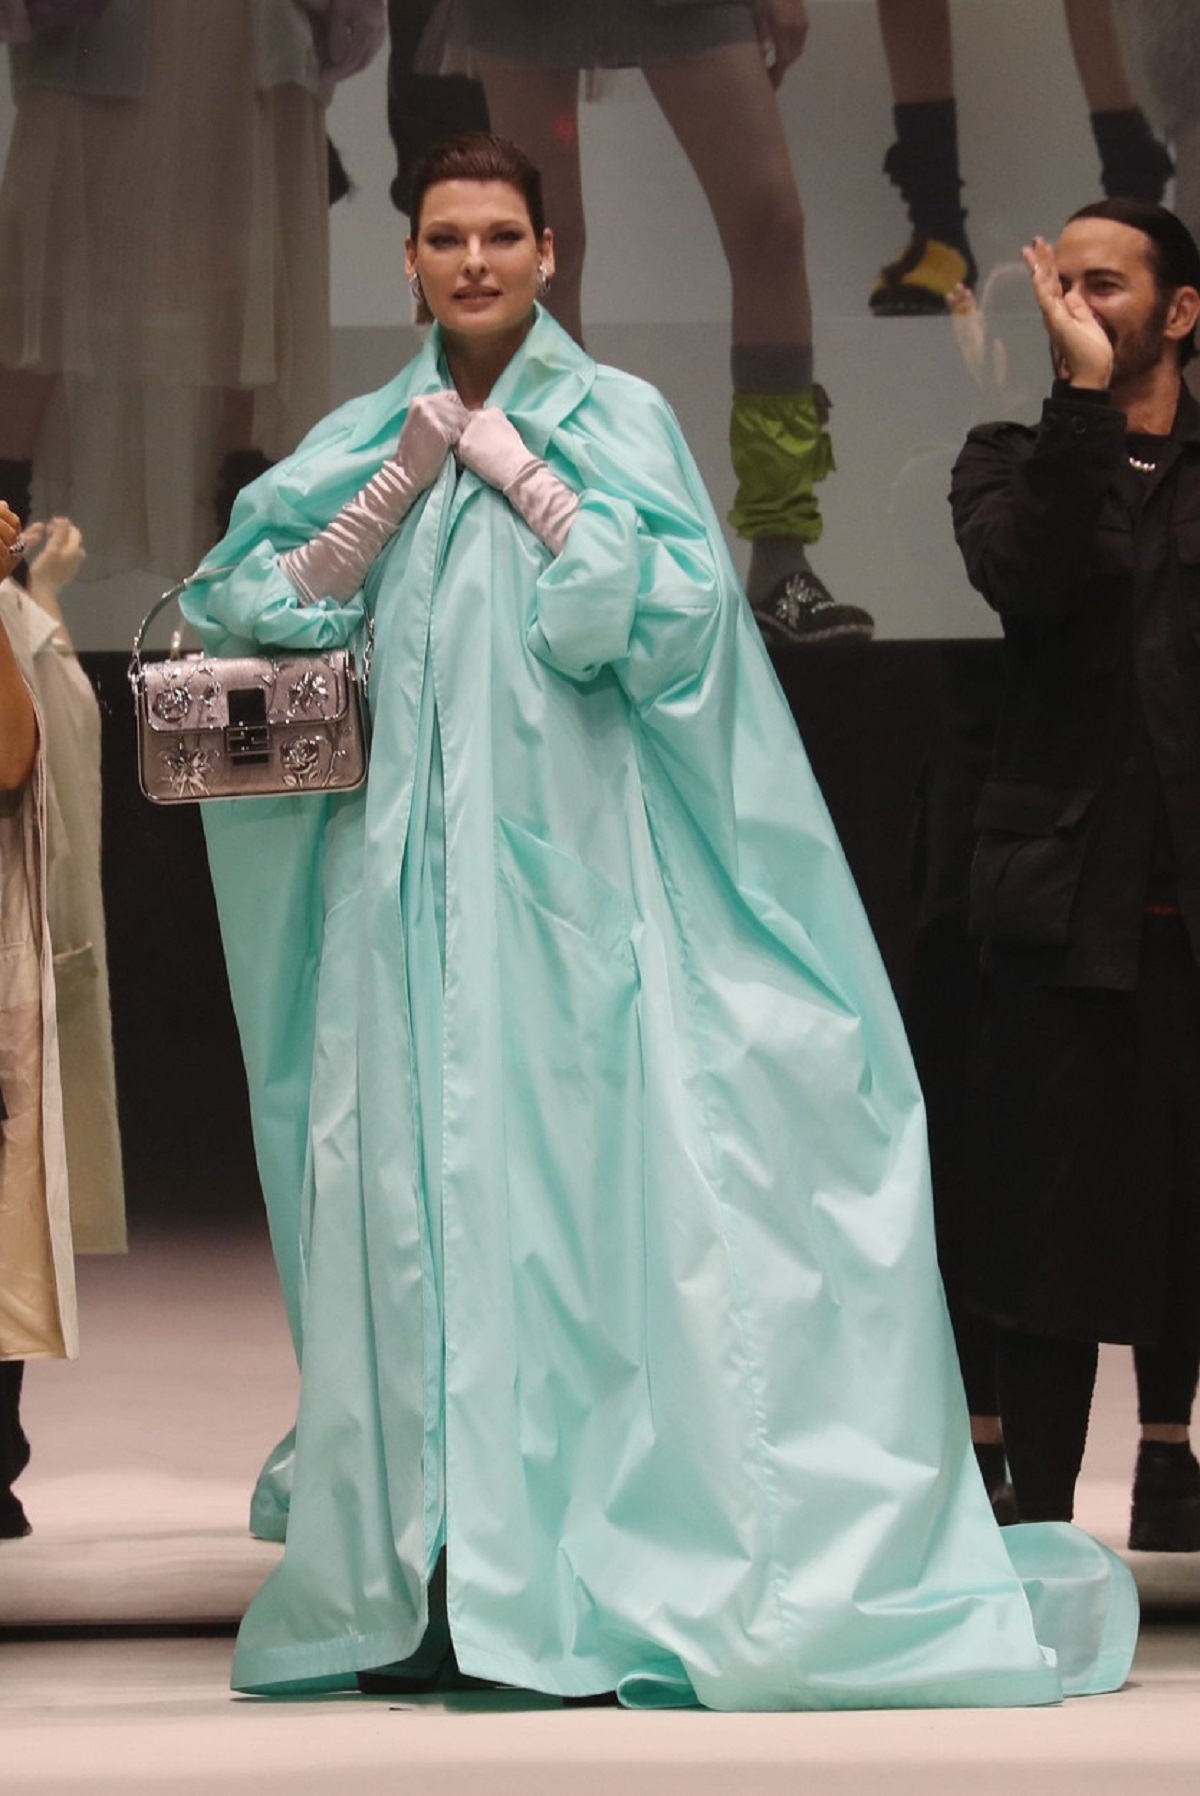 Linda Evangelista într-o rochie albastră la săptămâna Modei de la New York